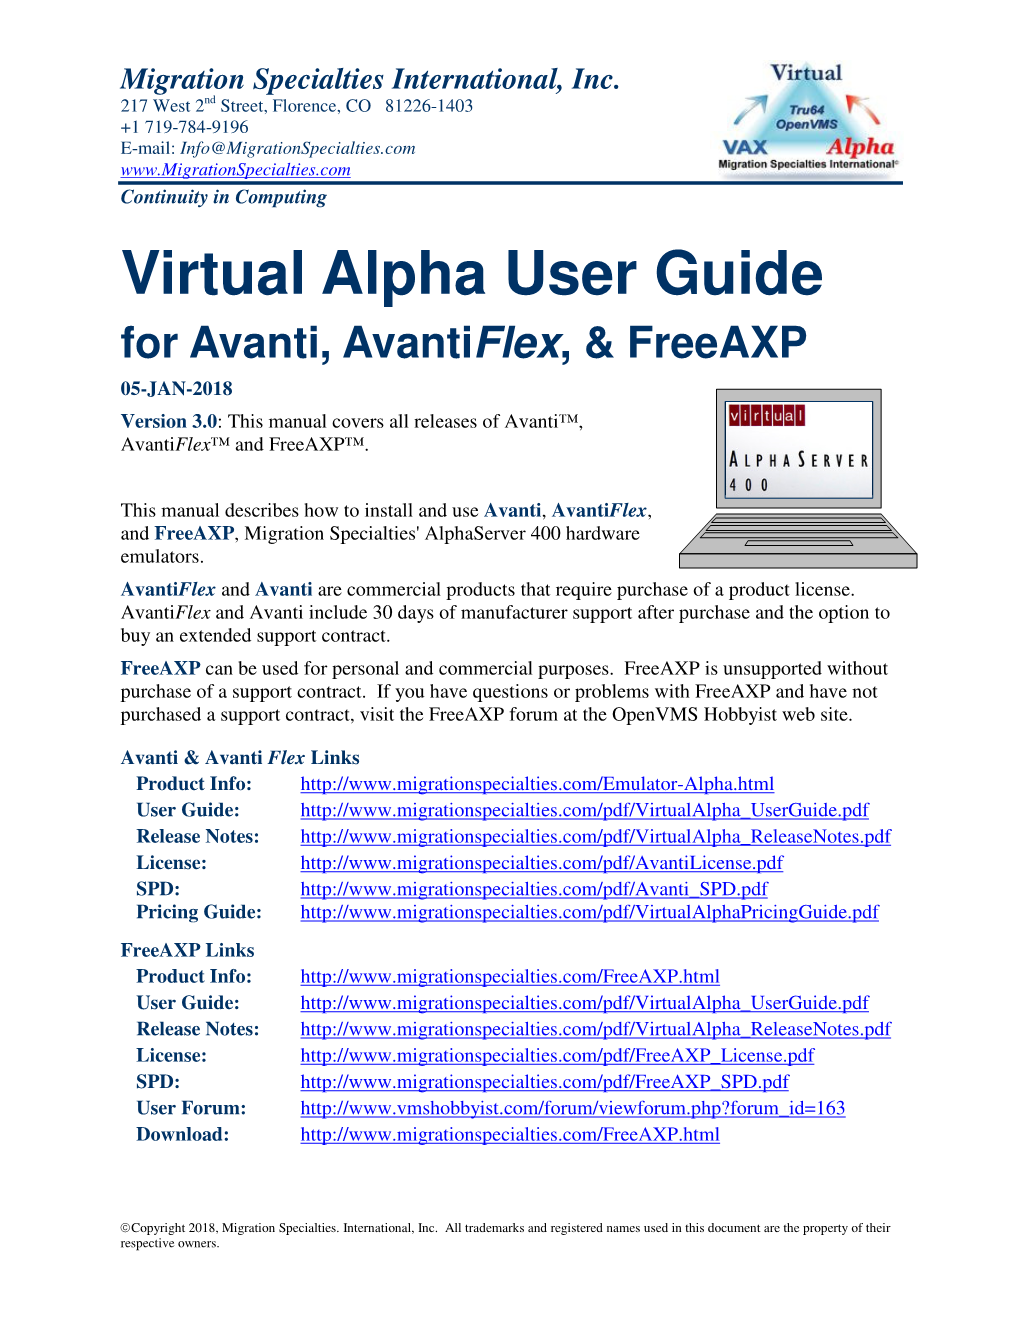 Virtual Alpha User Guide for Avanti, Avantiflex, & Freeaxp 05-JAN-2018 Version 3.0: This Manual Covers All Releases of Avanti™, Avantiflex™ and Freeaxp™